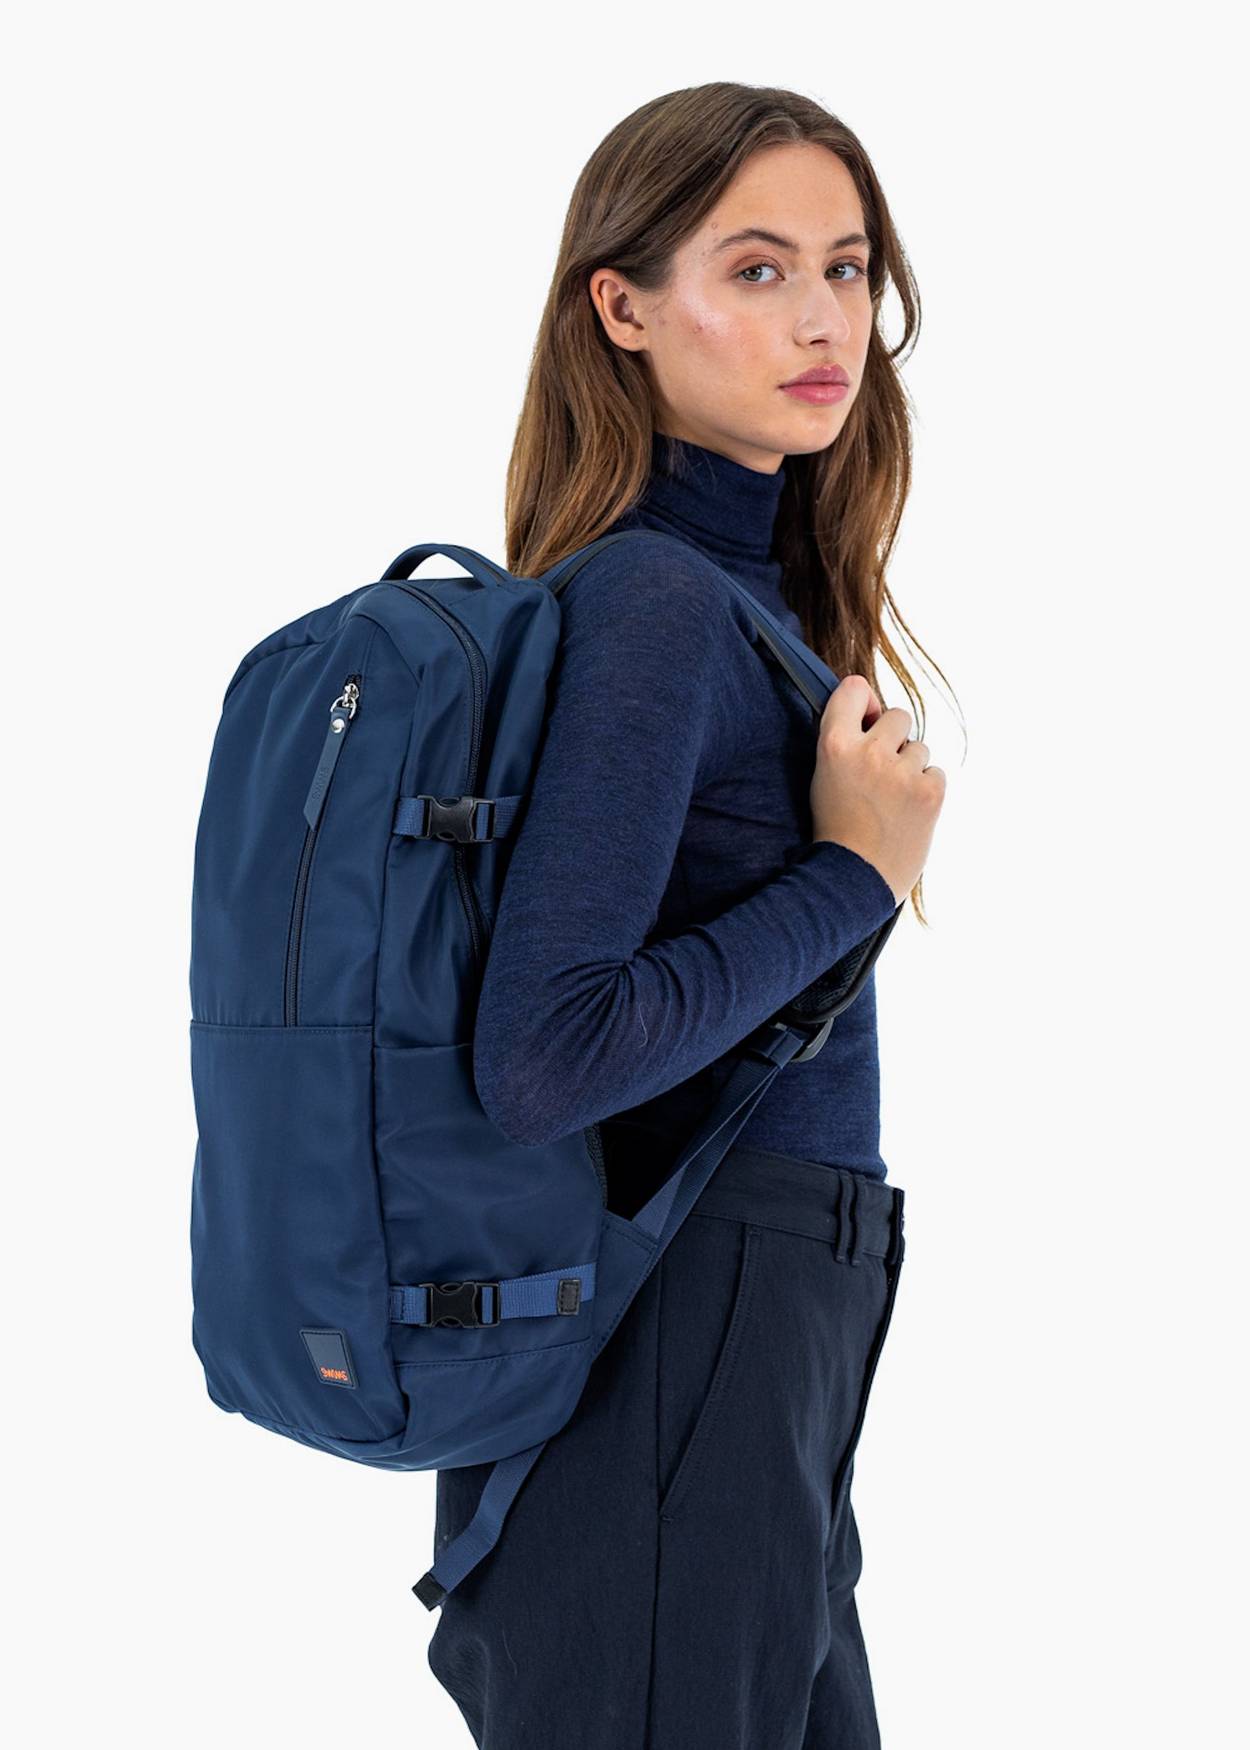 Motion Backpack